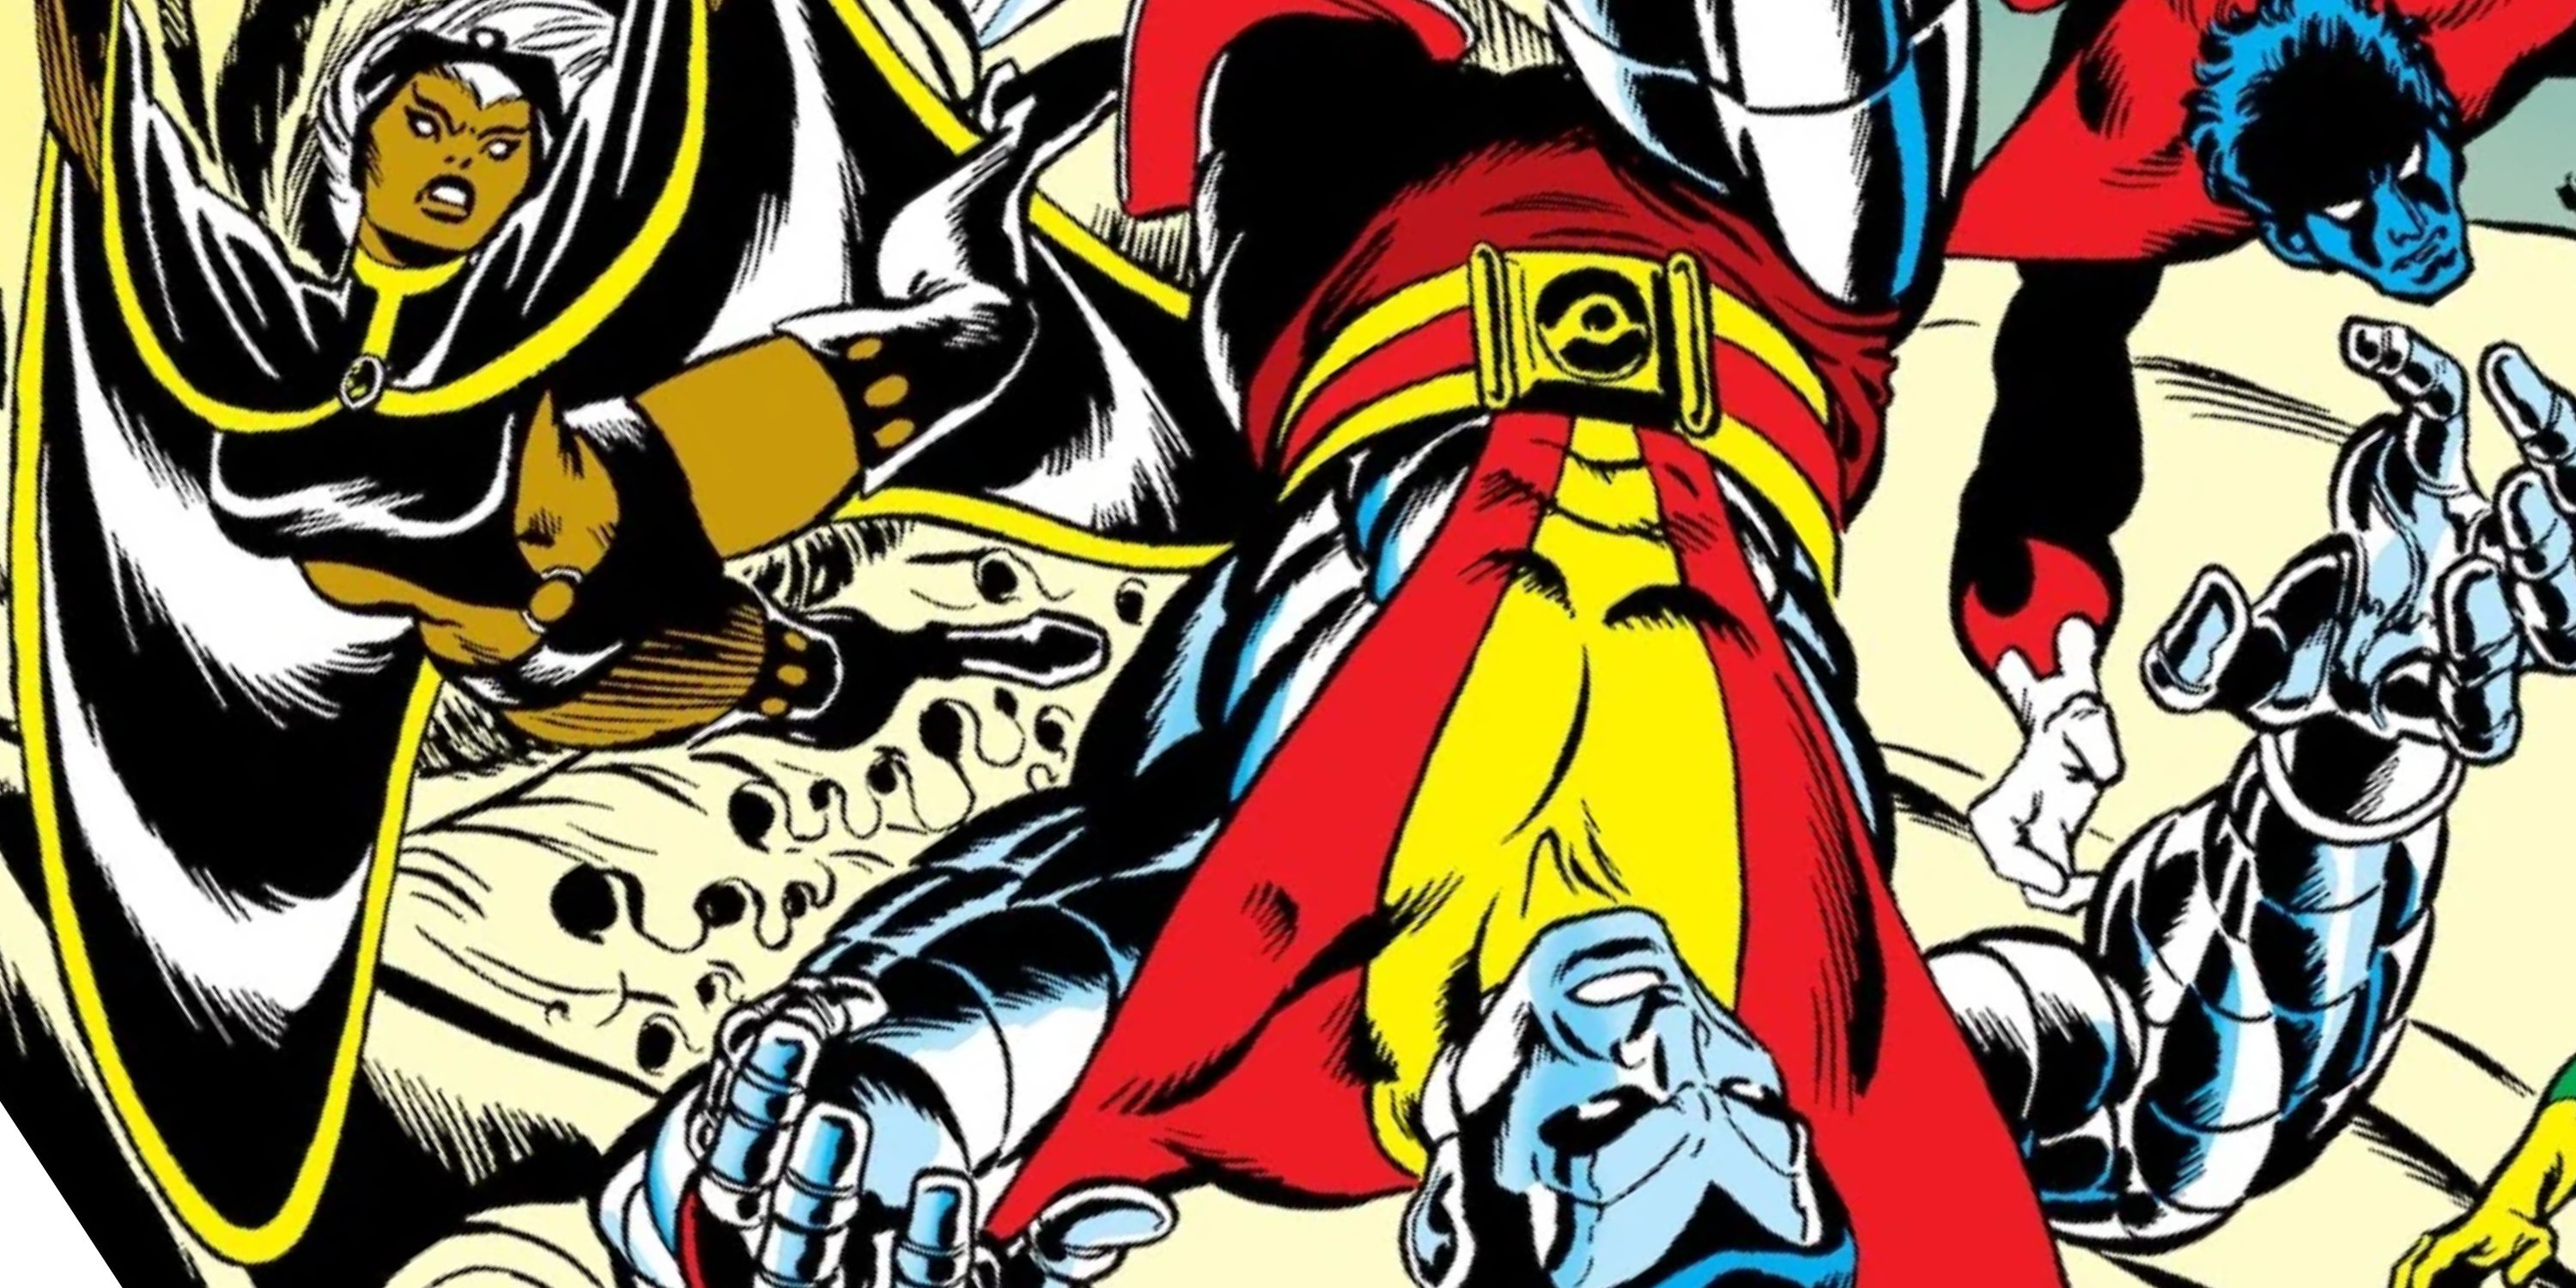 Storm, Colossus, and Nightcrawler falling in X-Men comics